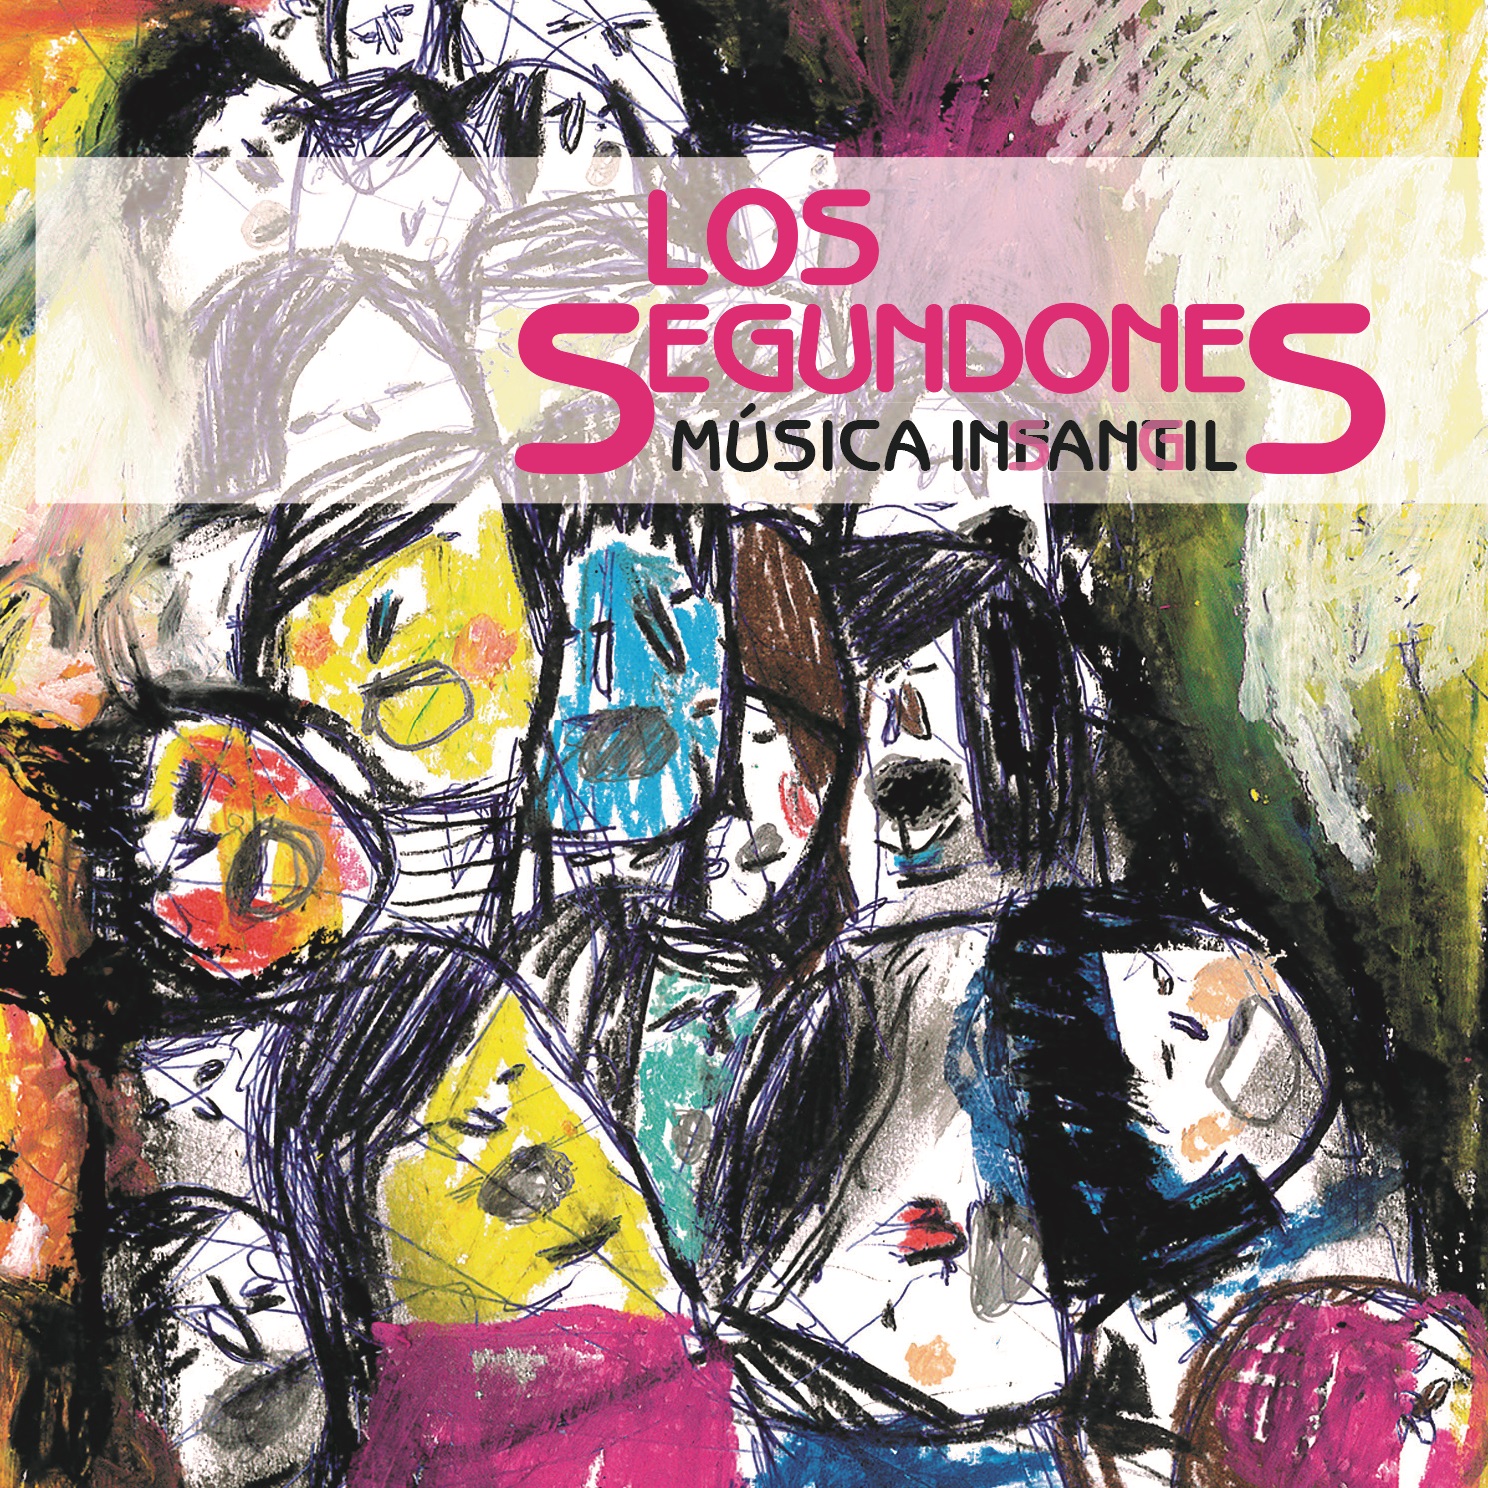 Los Segundones (Música Insangil)